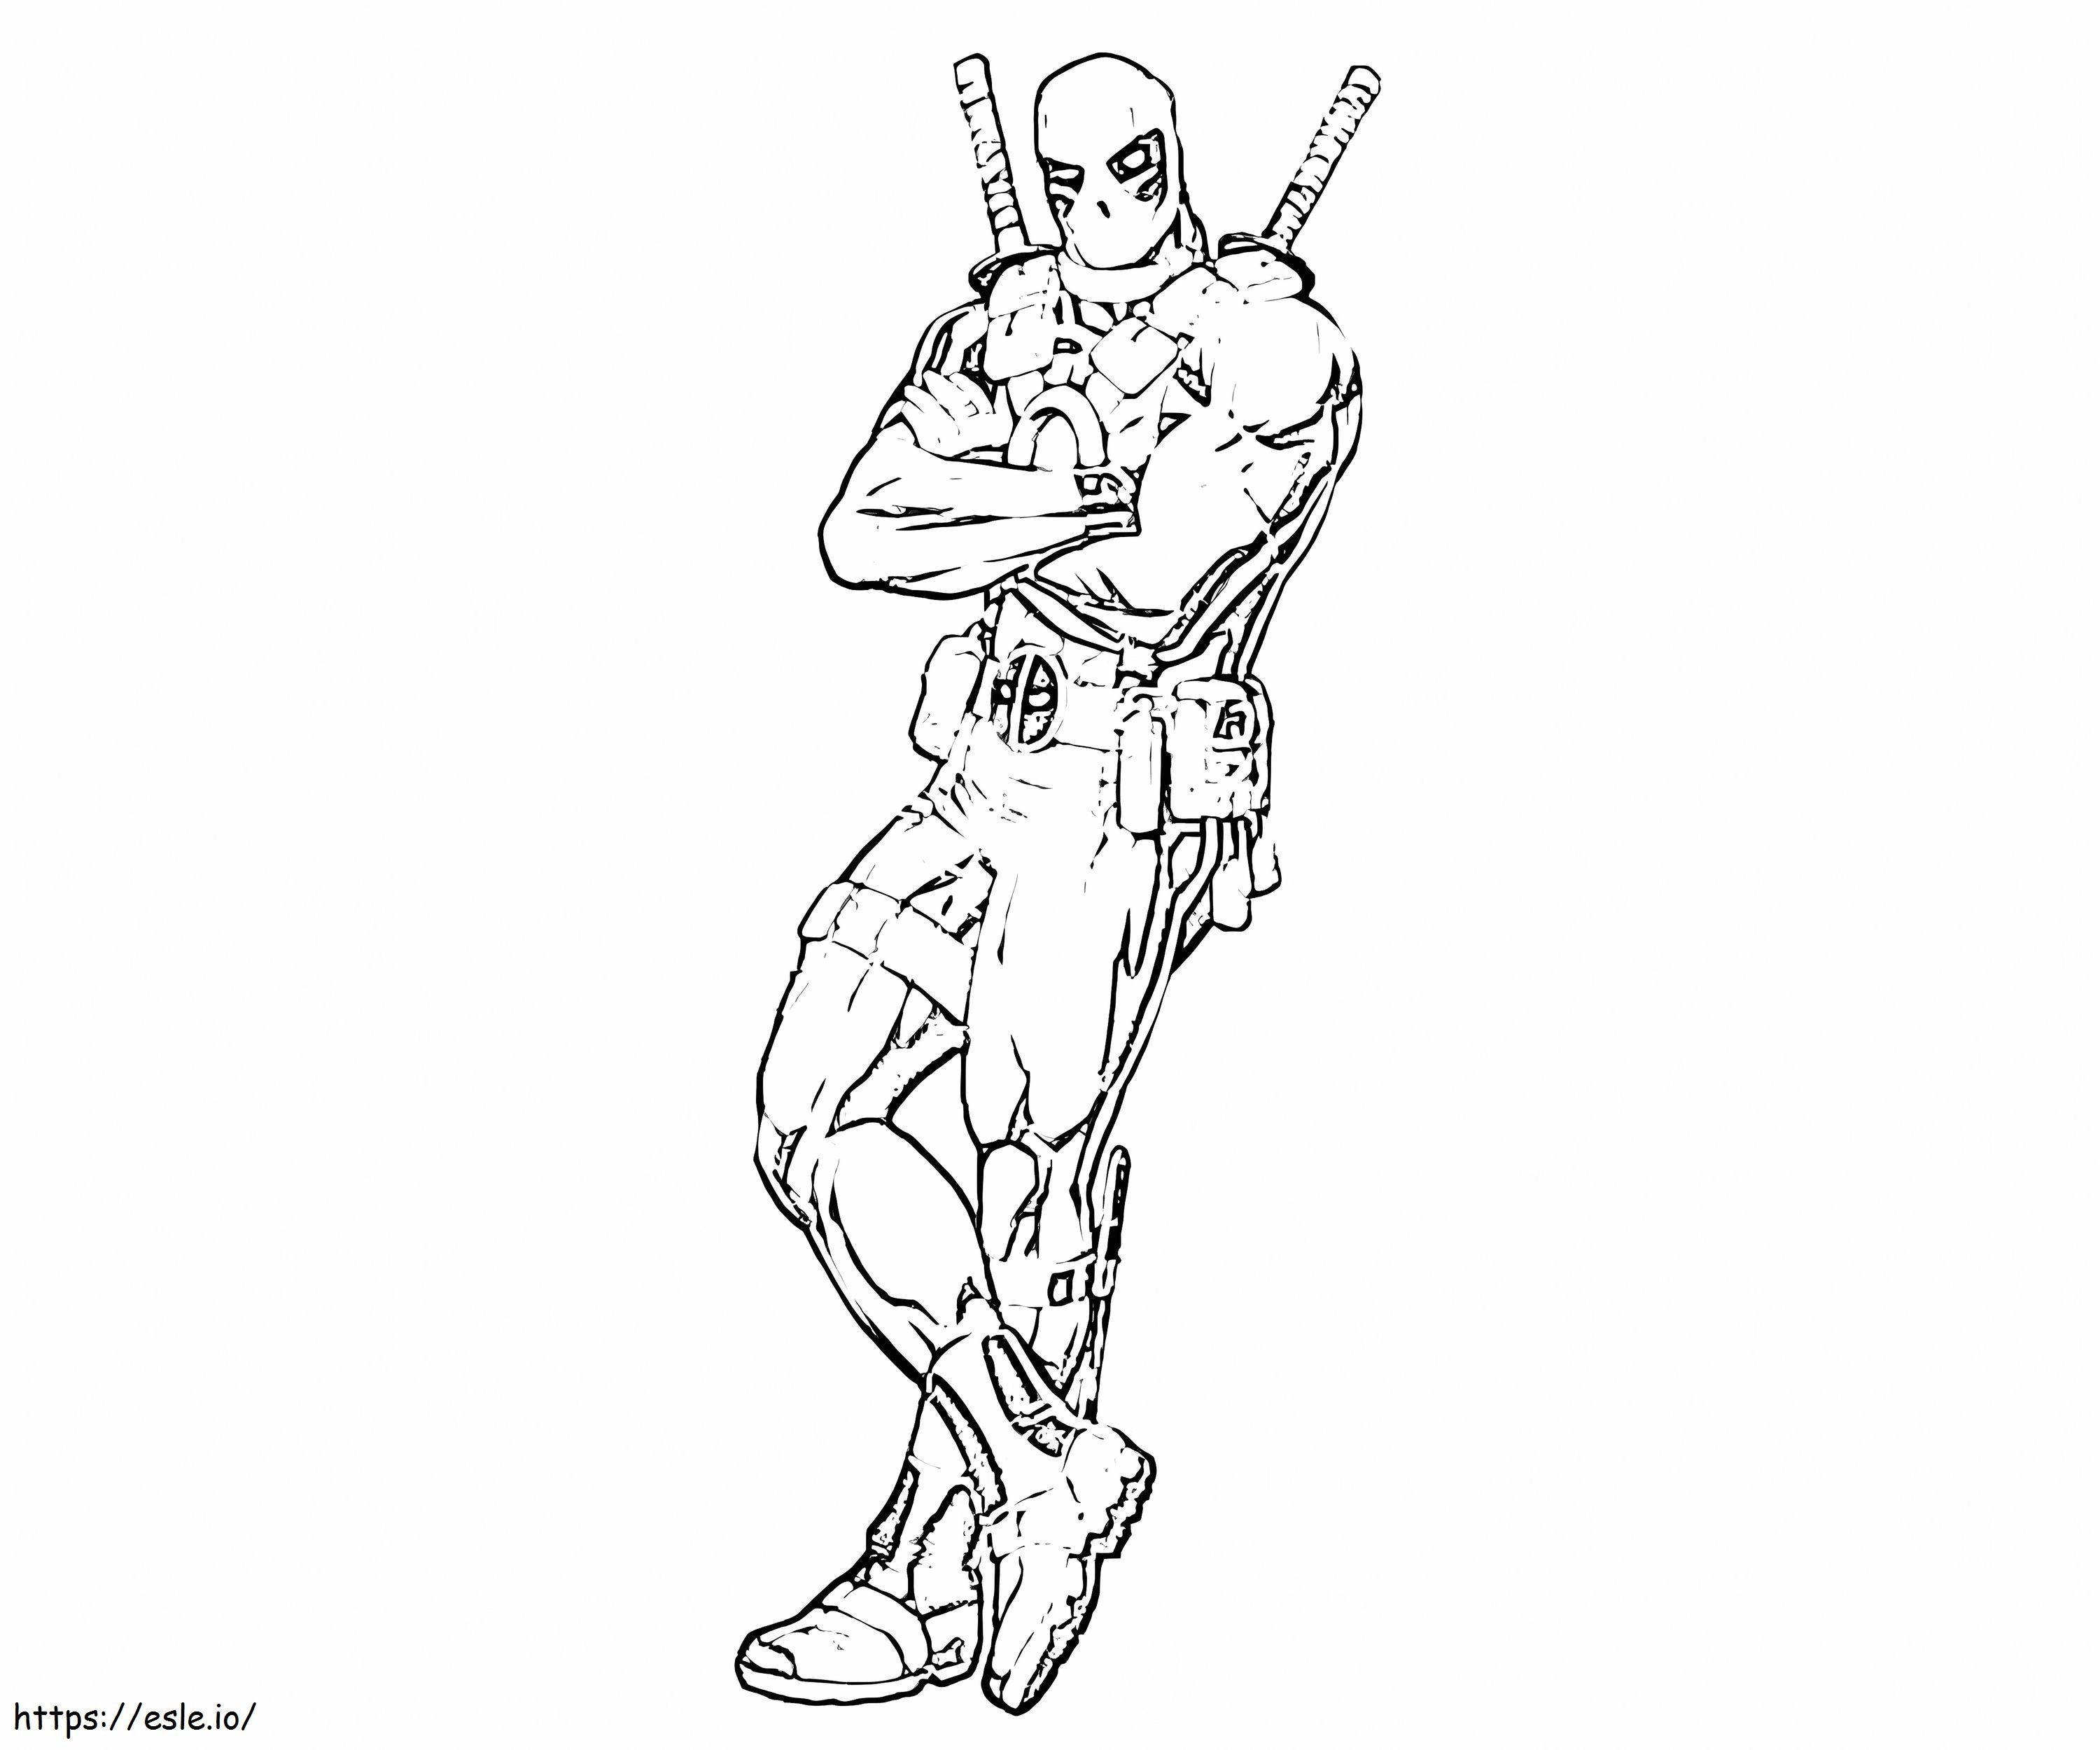 Podstawowy rysunek Deadpoola kolorowanka